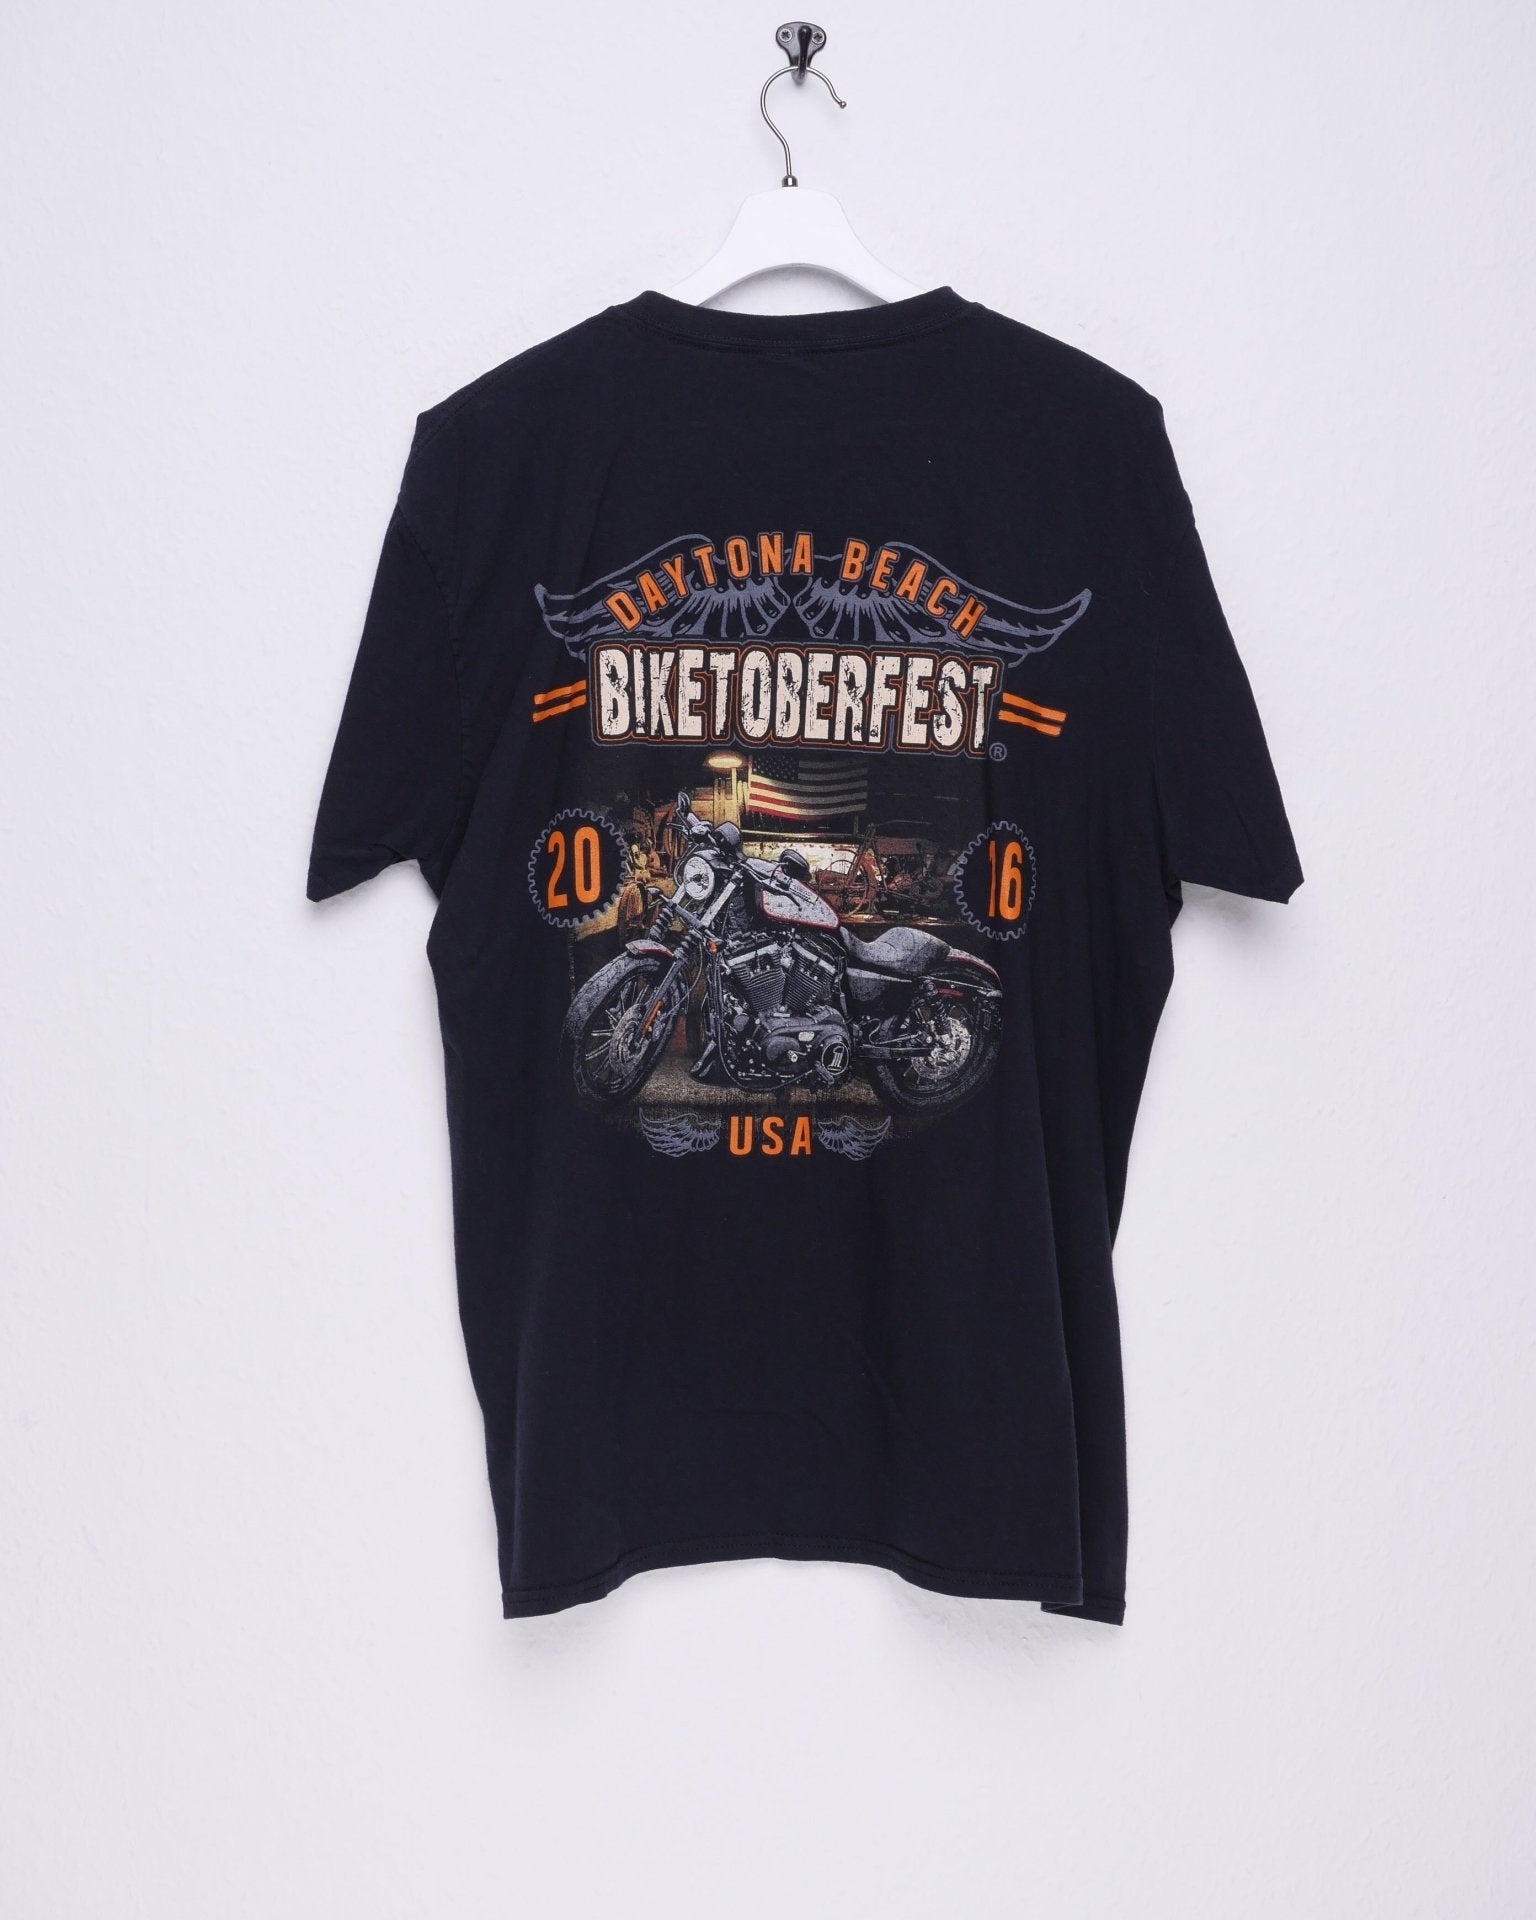 Daytona Beach Biketoberfest 2016 printed Graphic black Shirt - Peeces